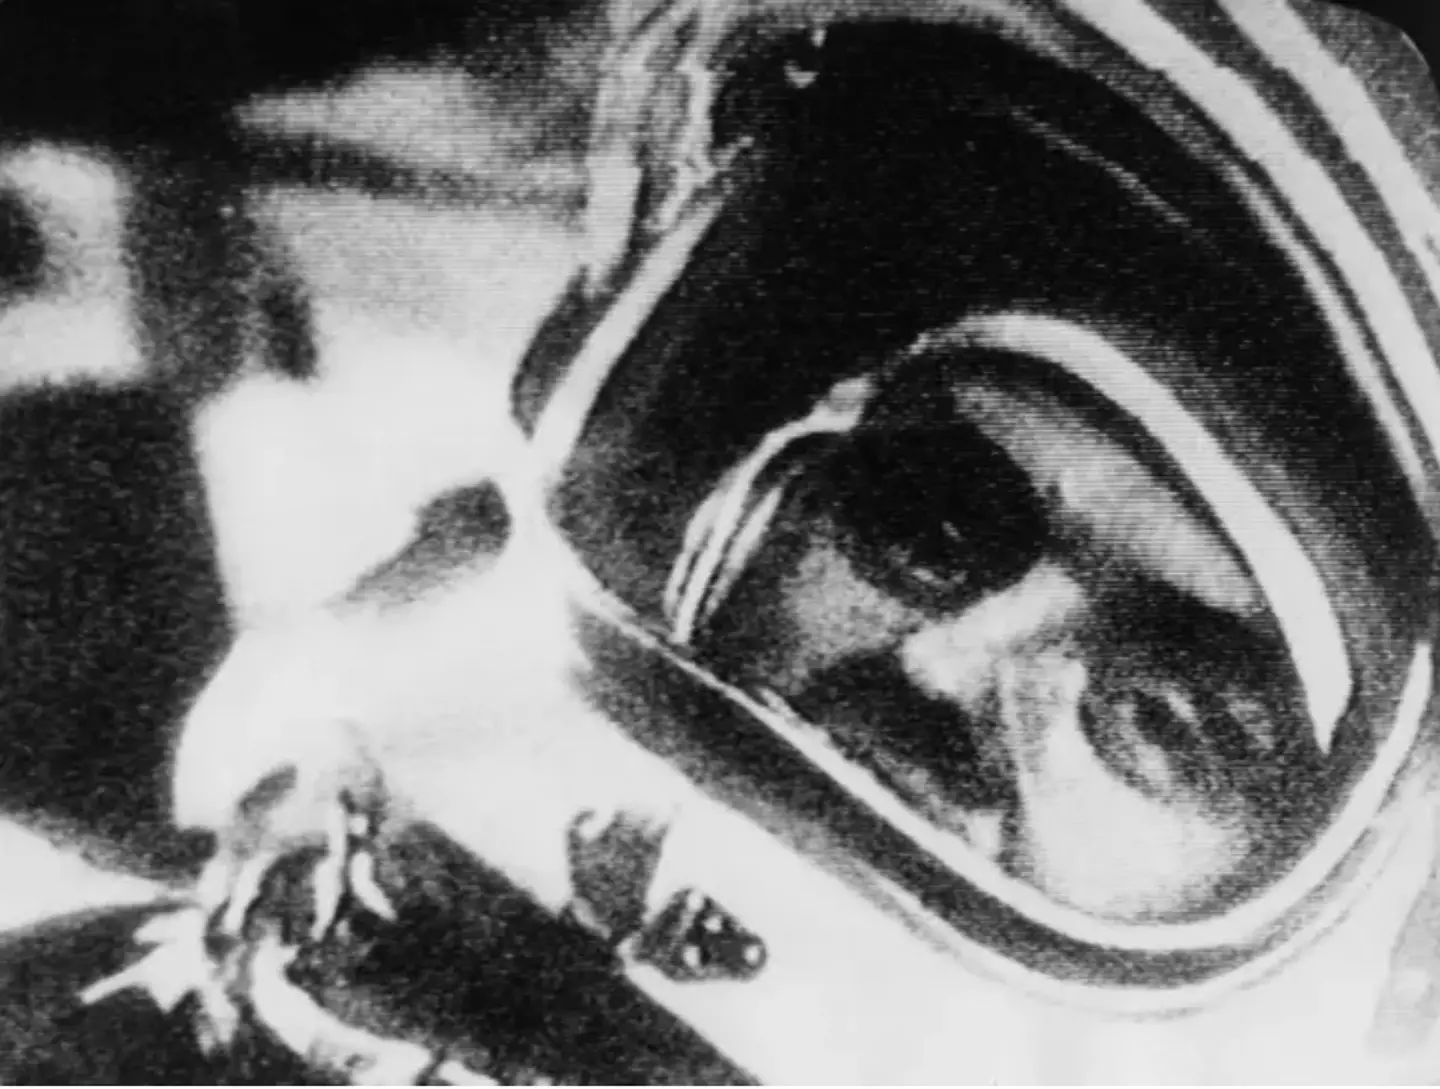 Vladimir Mikhaylovich Komarov last mission of the Soviet space program took place on 23 April, 1967.